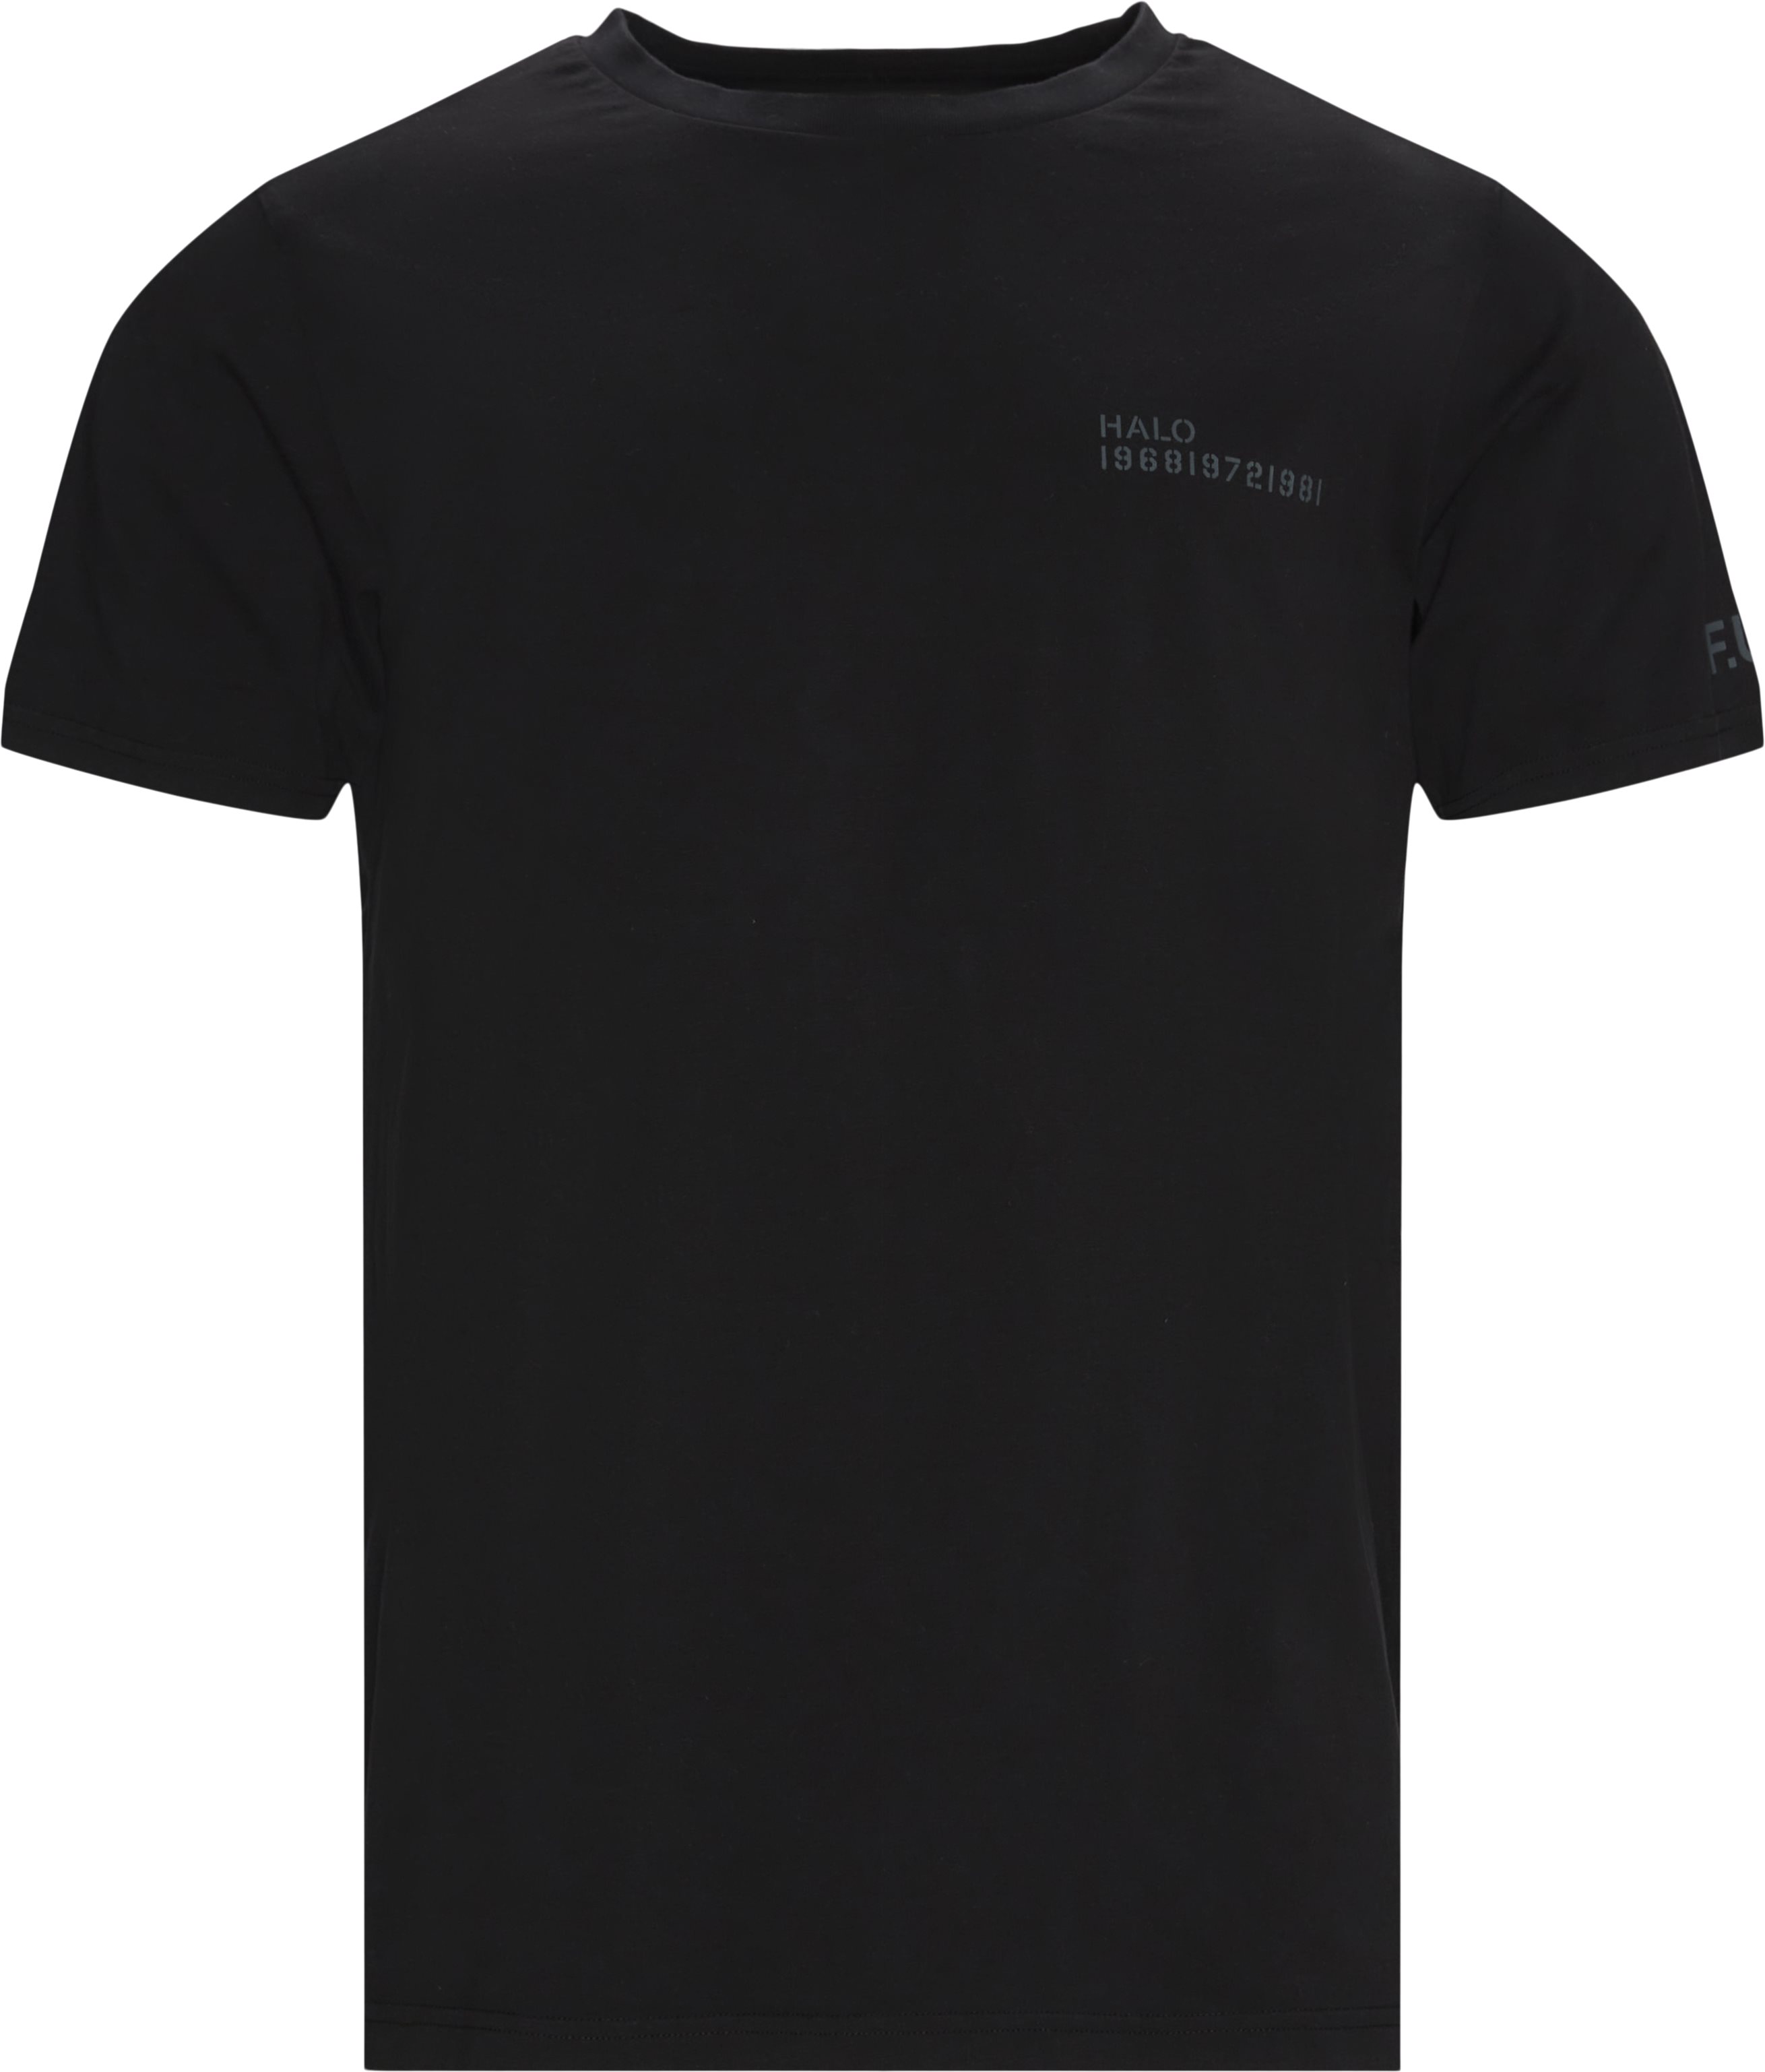 Cotton Tee  - T-shirts - Regular fit - Black